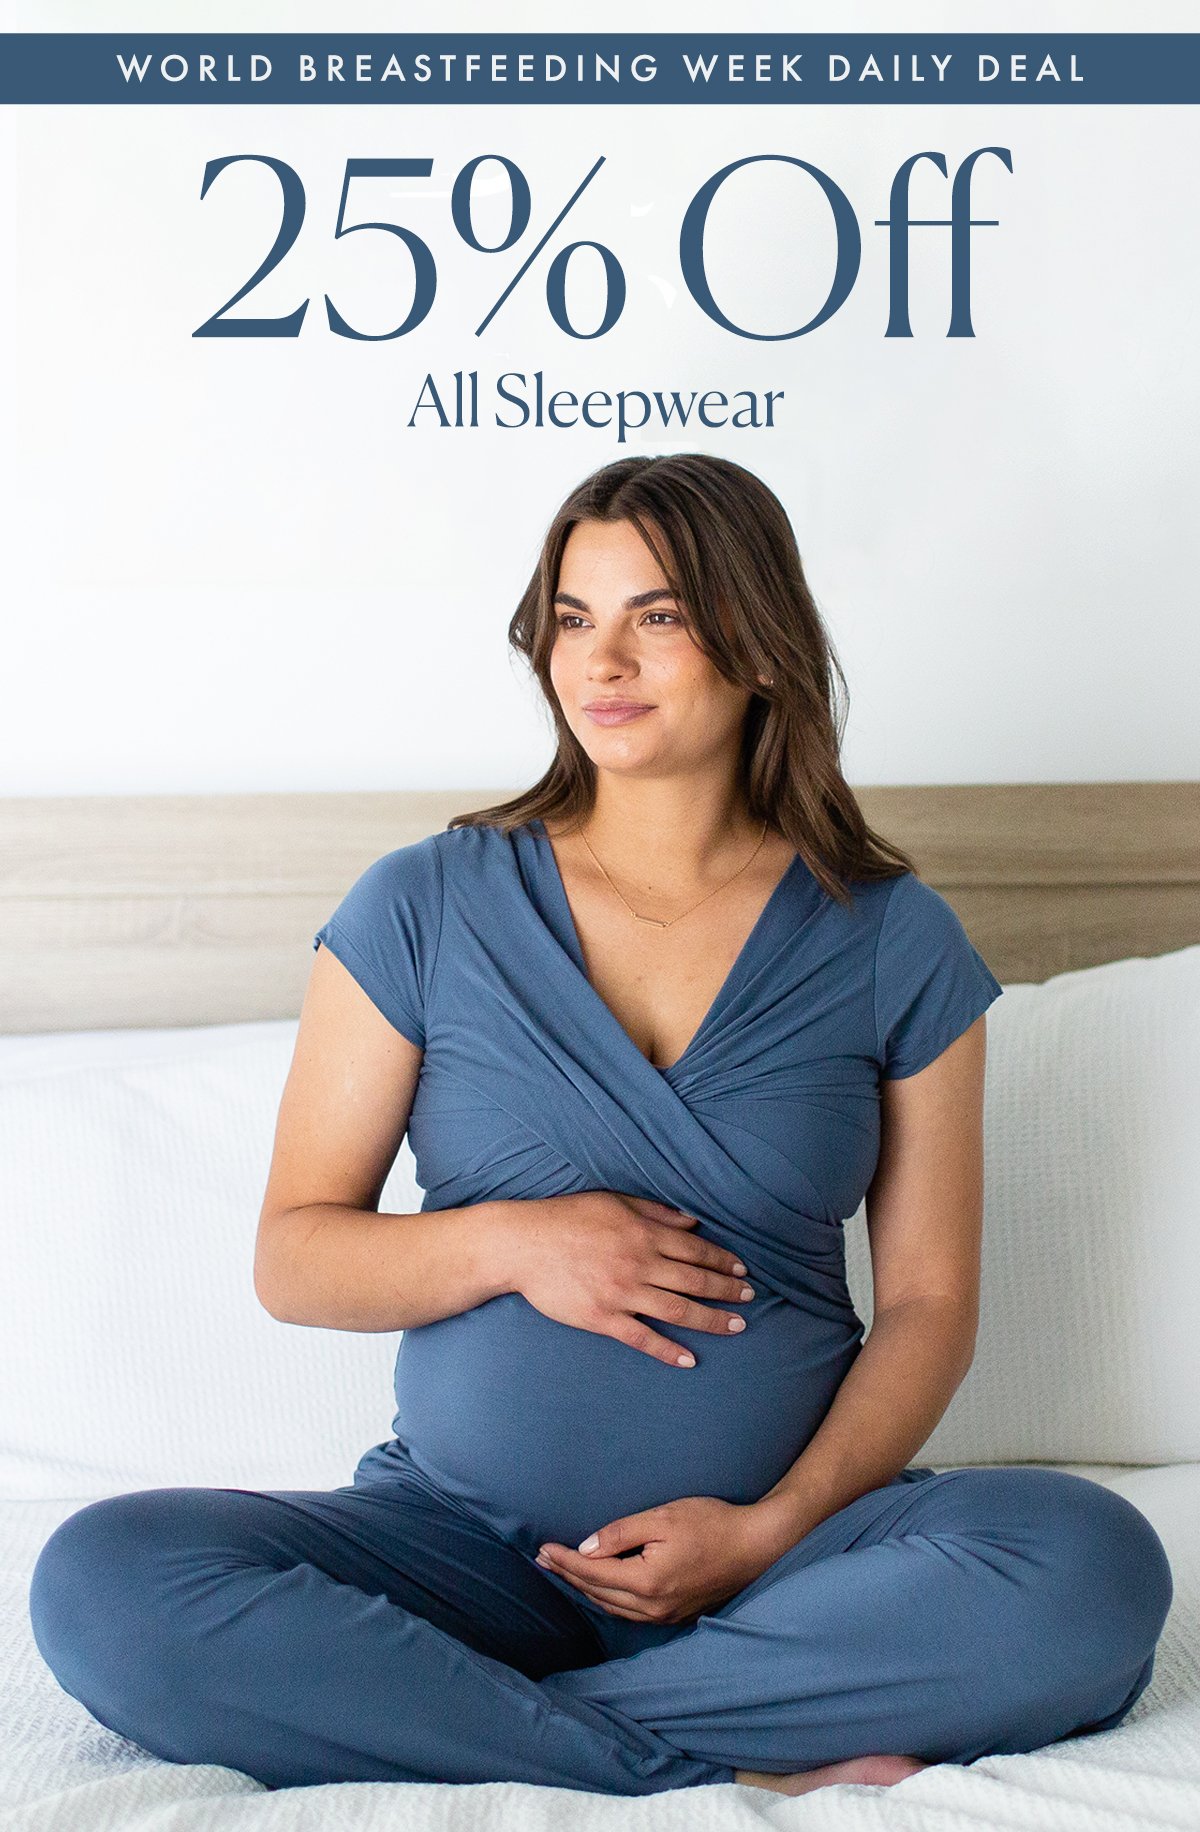 World Breastfeeding Week Daily Deal: 25% off Sleepwear